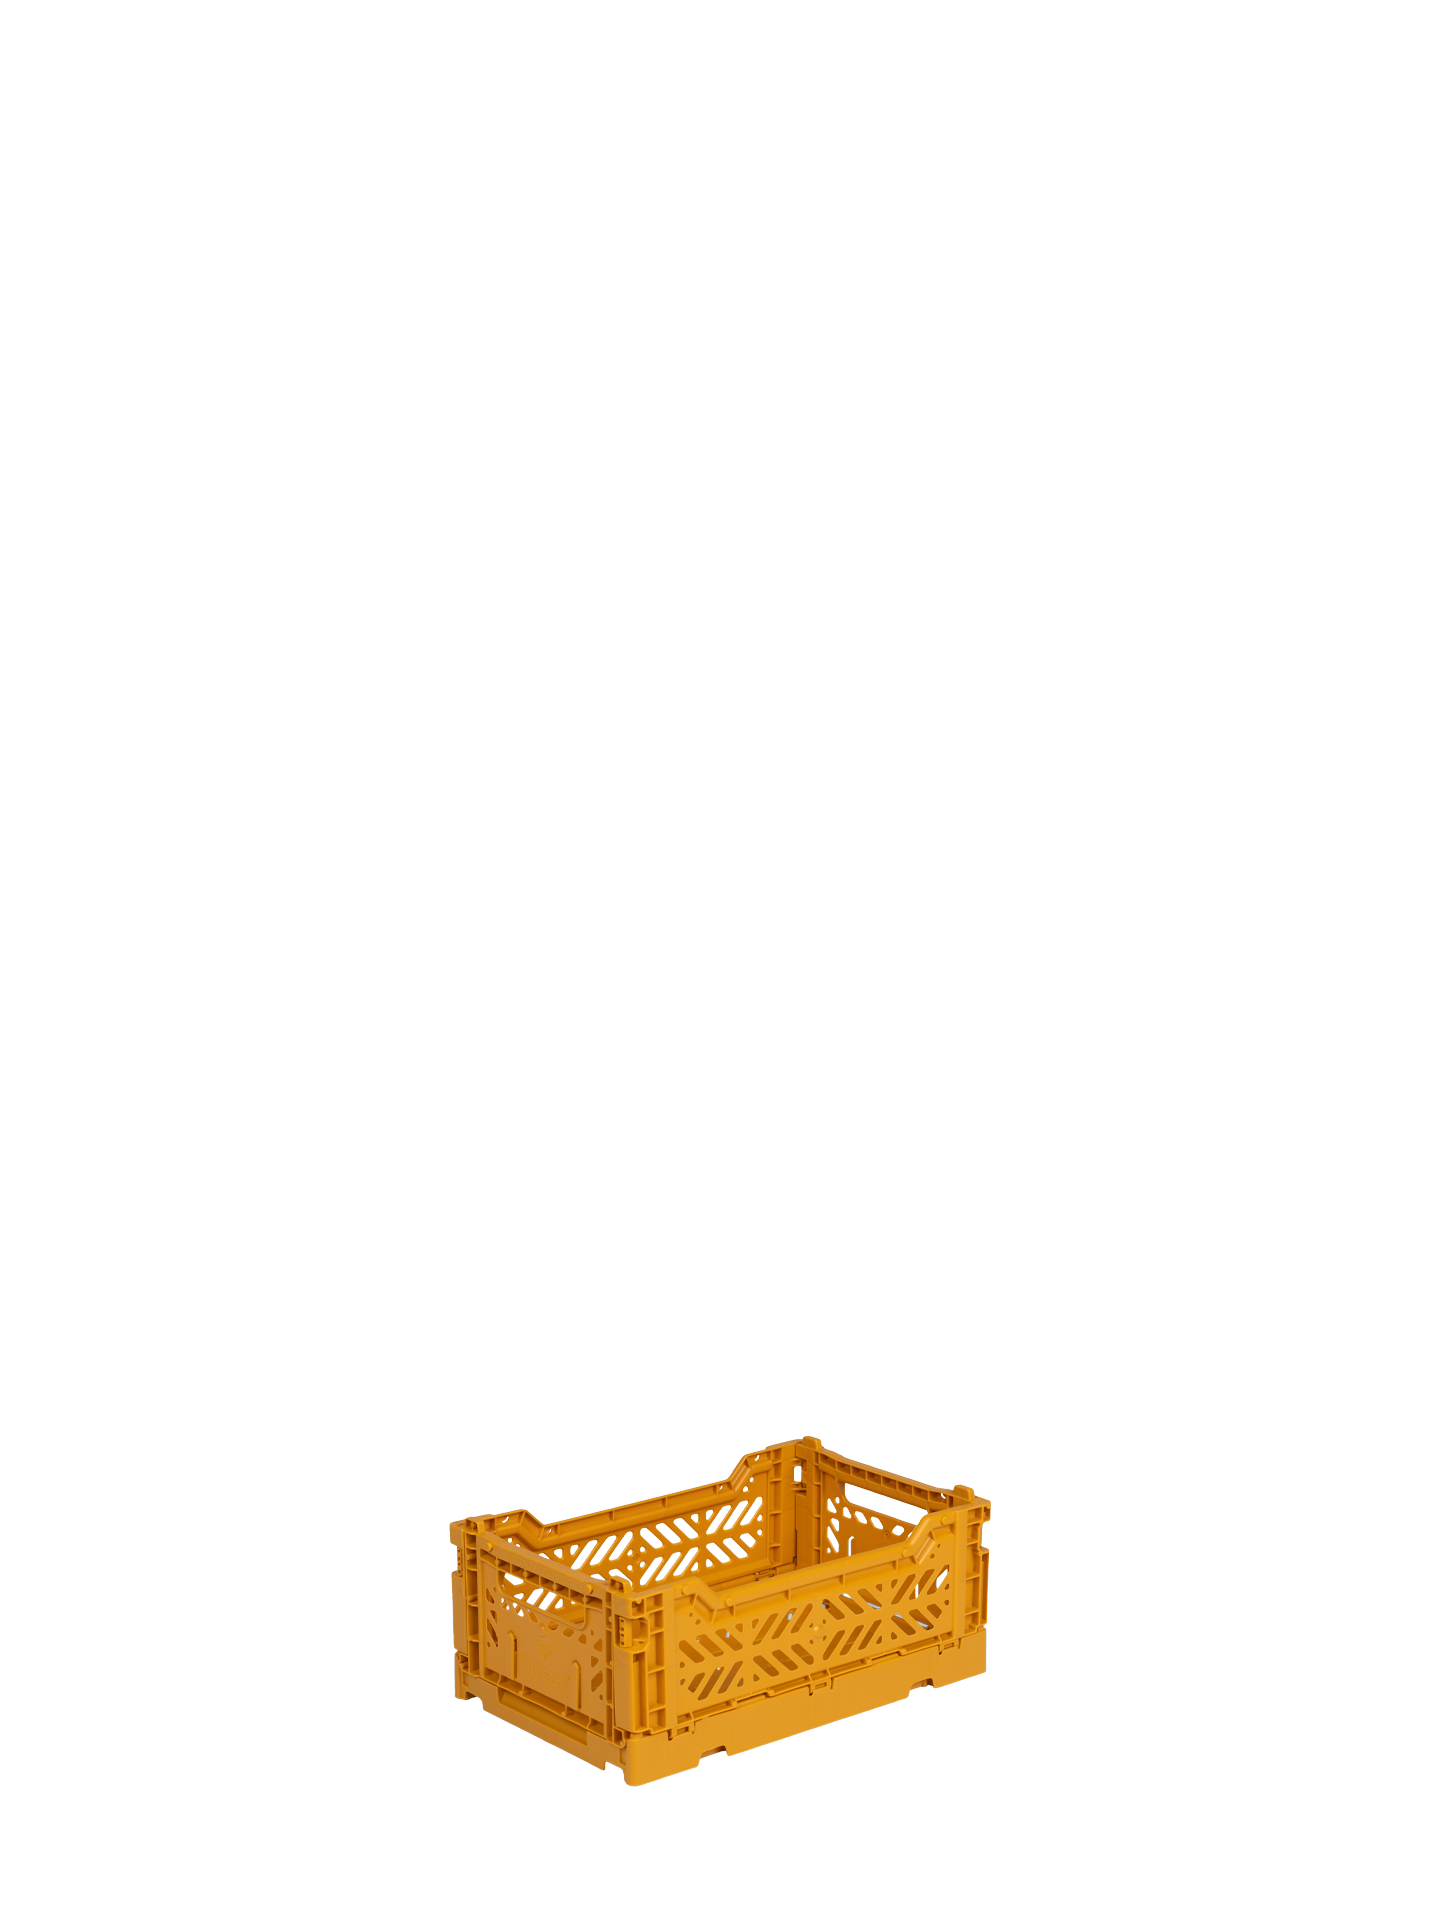 Mini Aykasa crate in mustard yellow stacks and folds